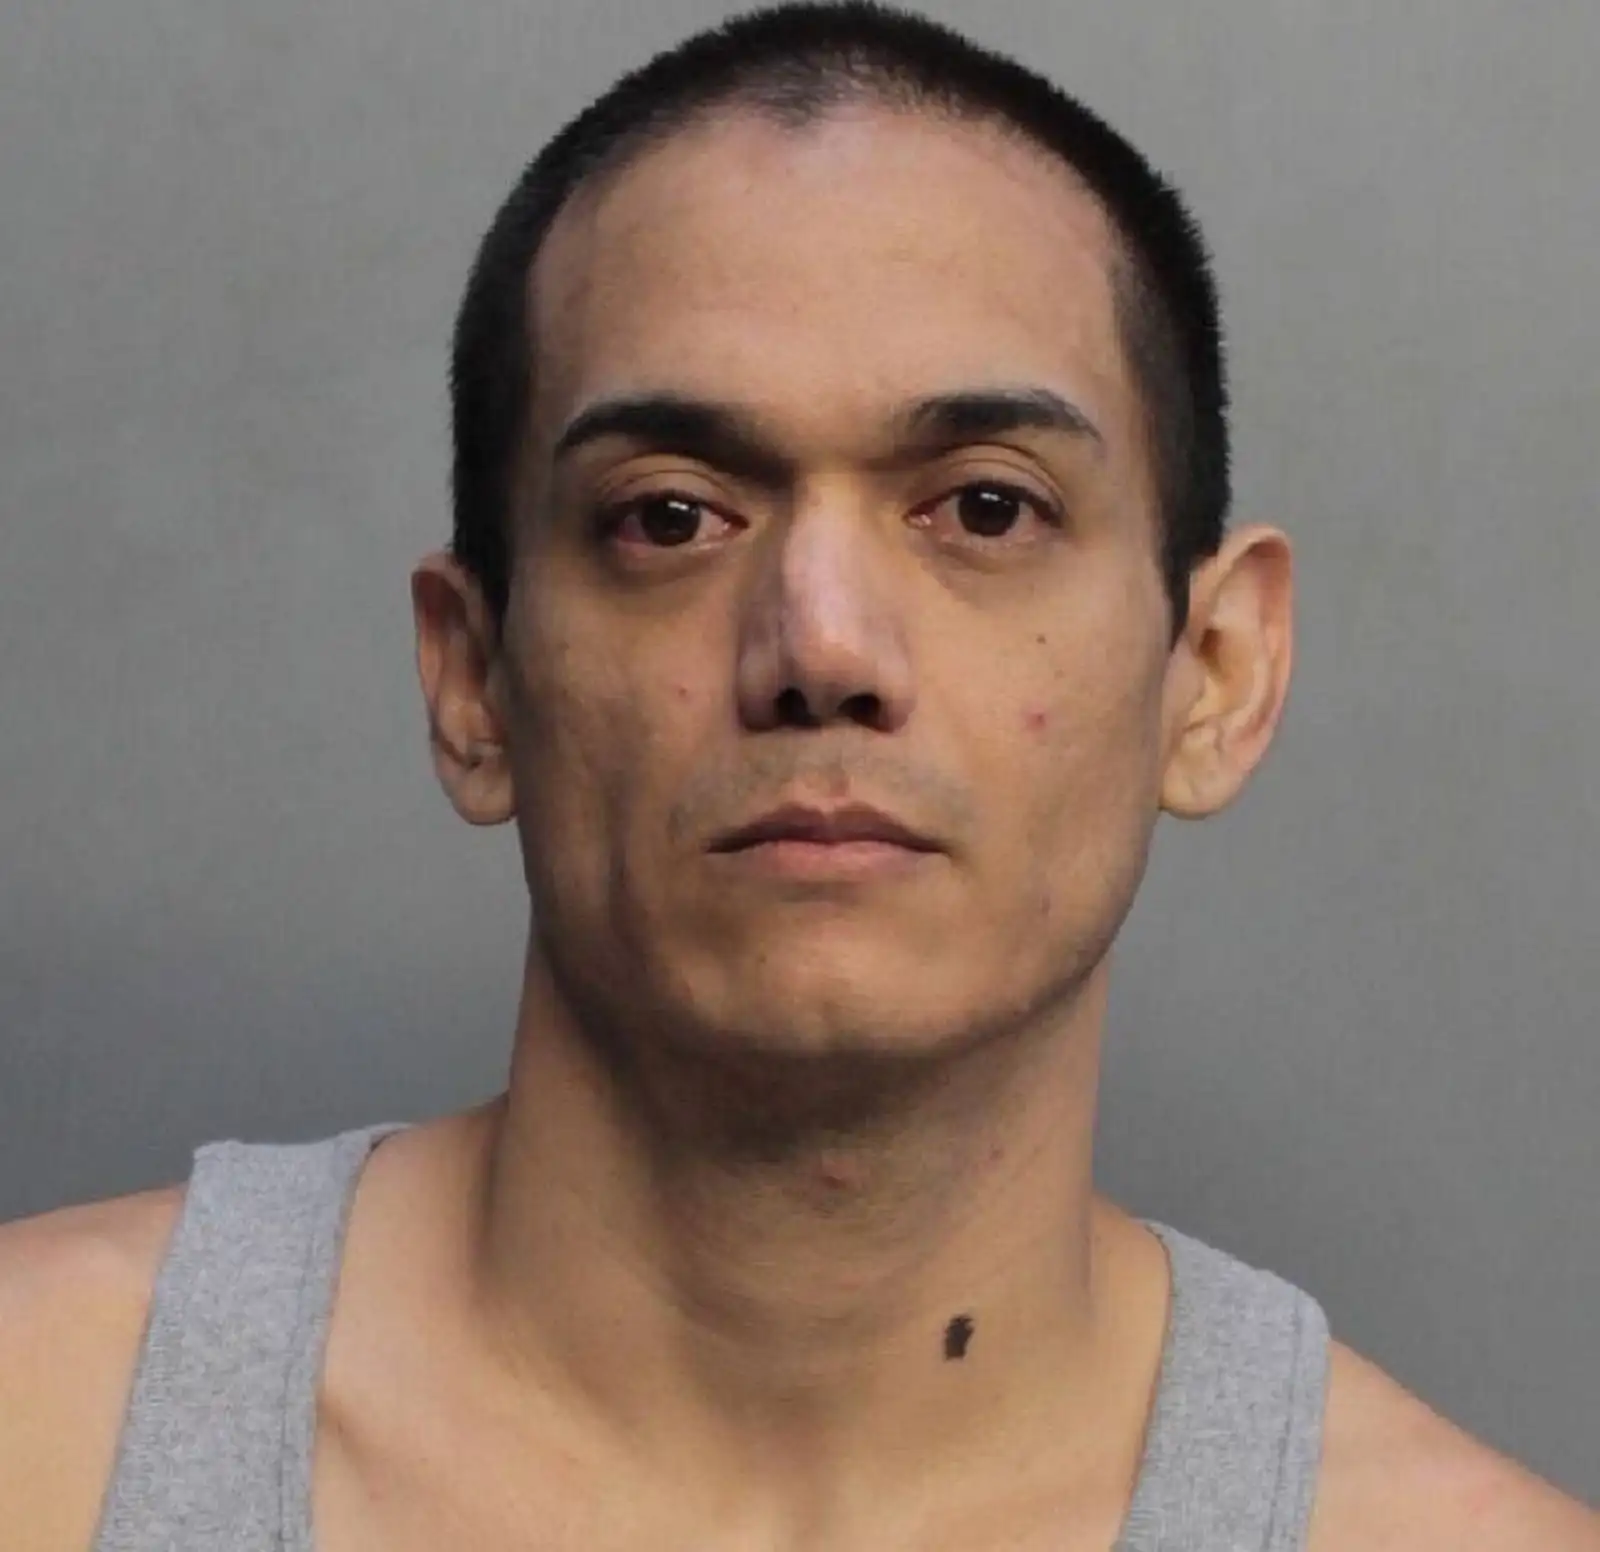 Florida man who tricked 80 men into gay sex sentenced to prison | PinkNews